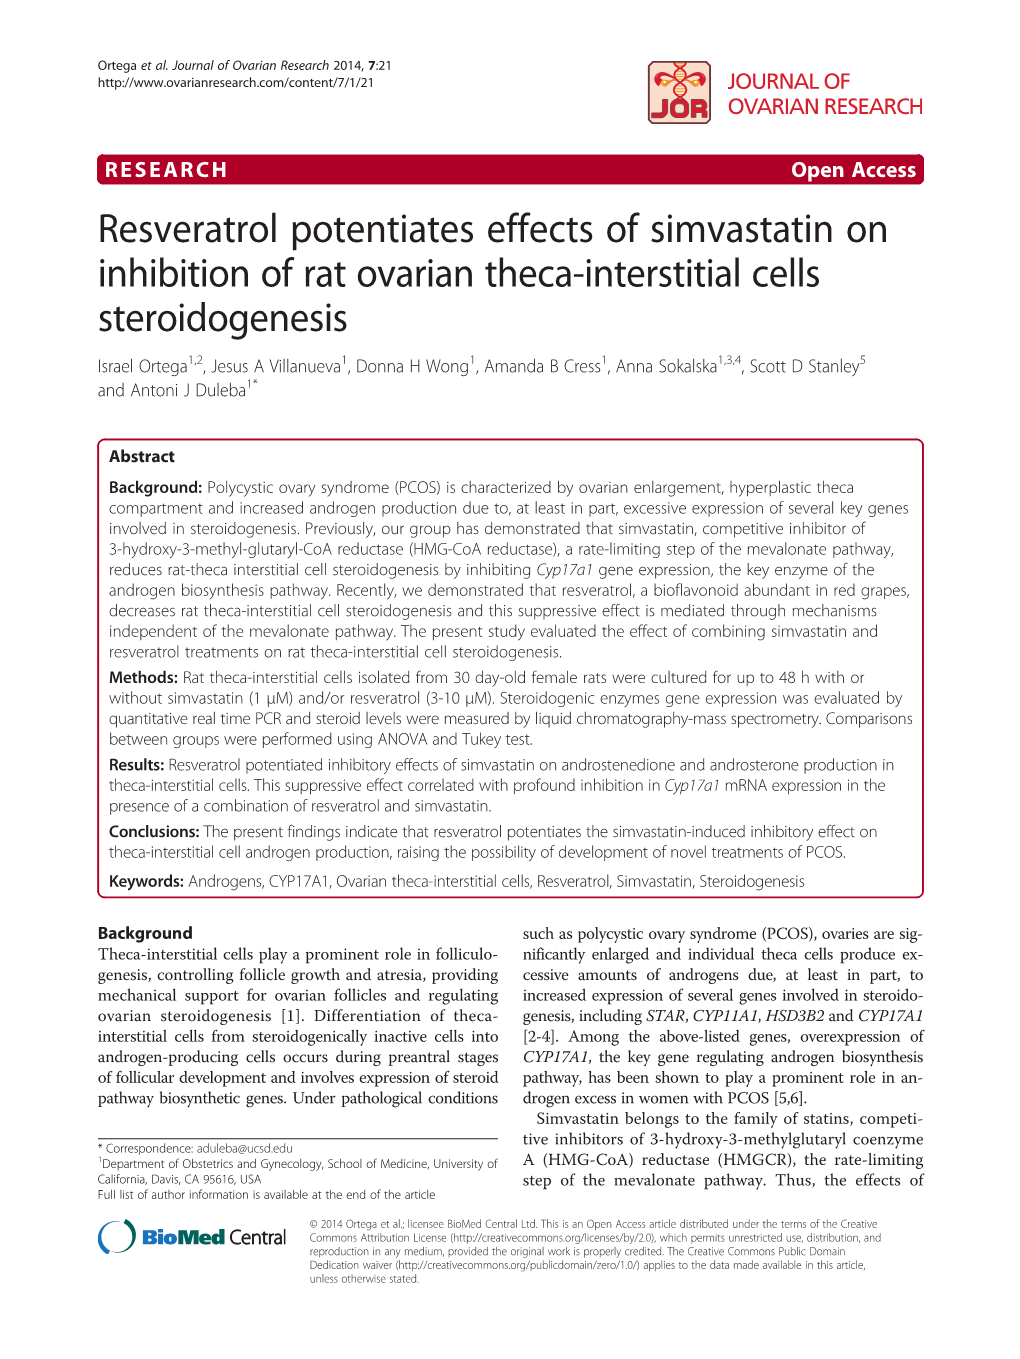 Resveratrol Potentiates Effects of Simvastatin on Inhibition of Rat